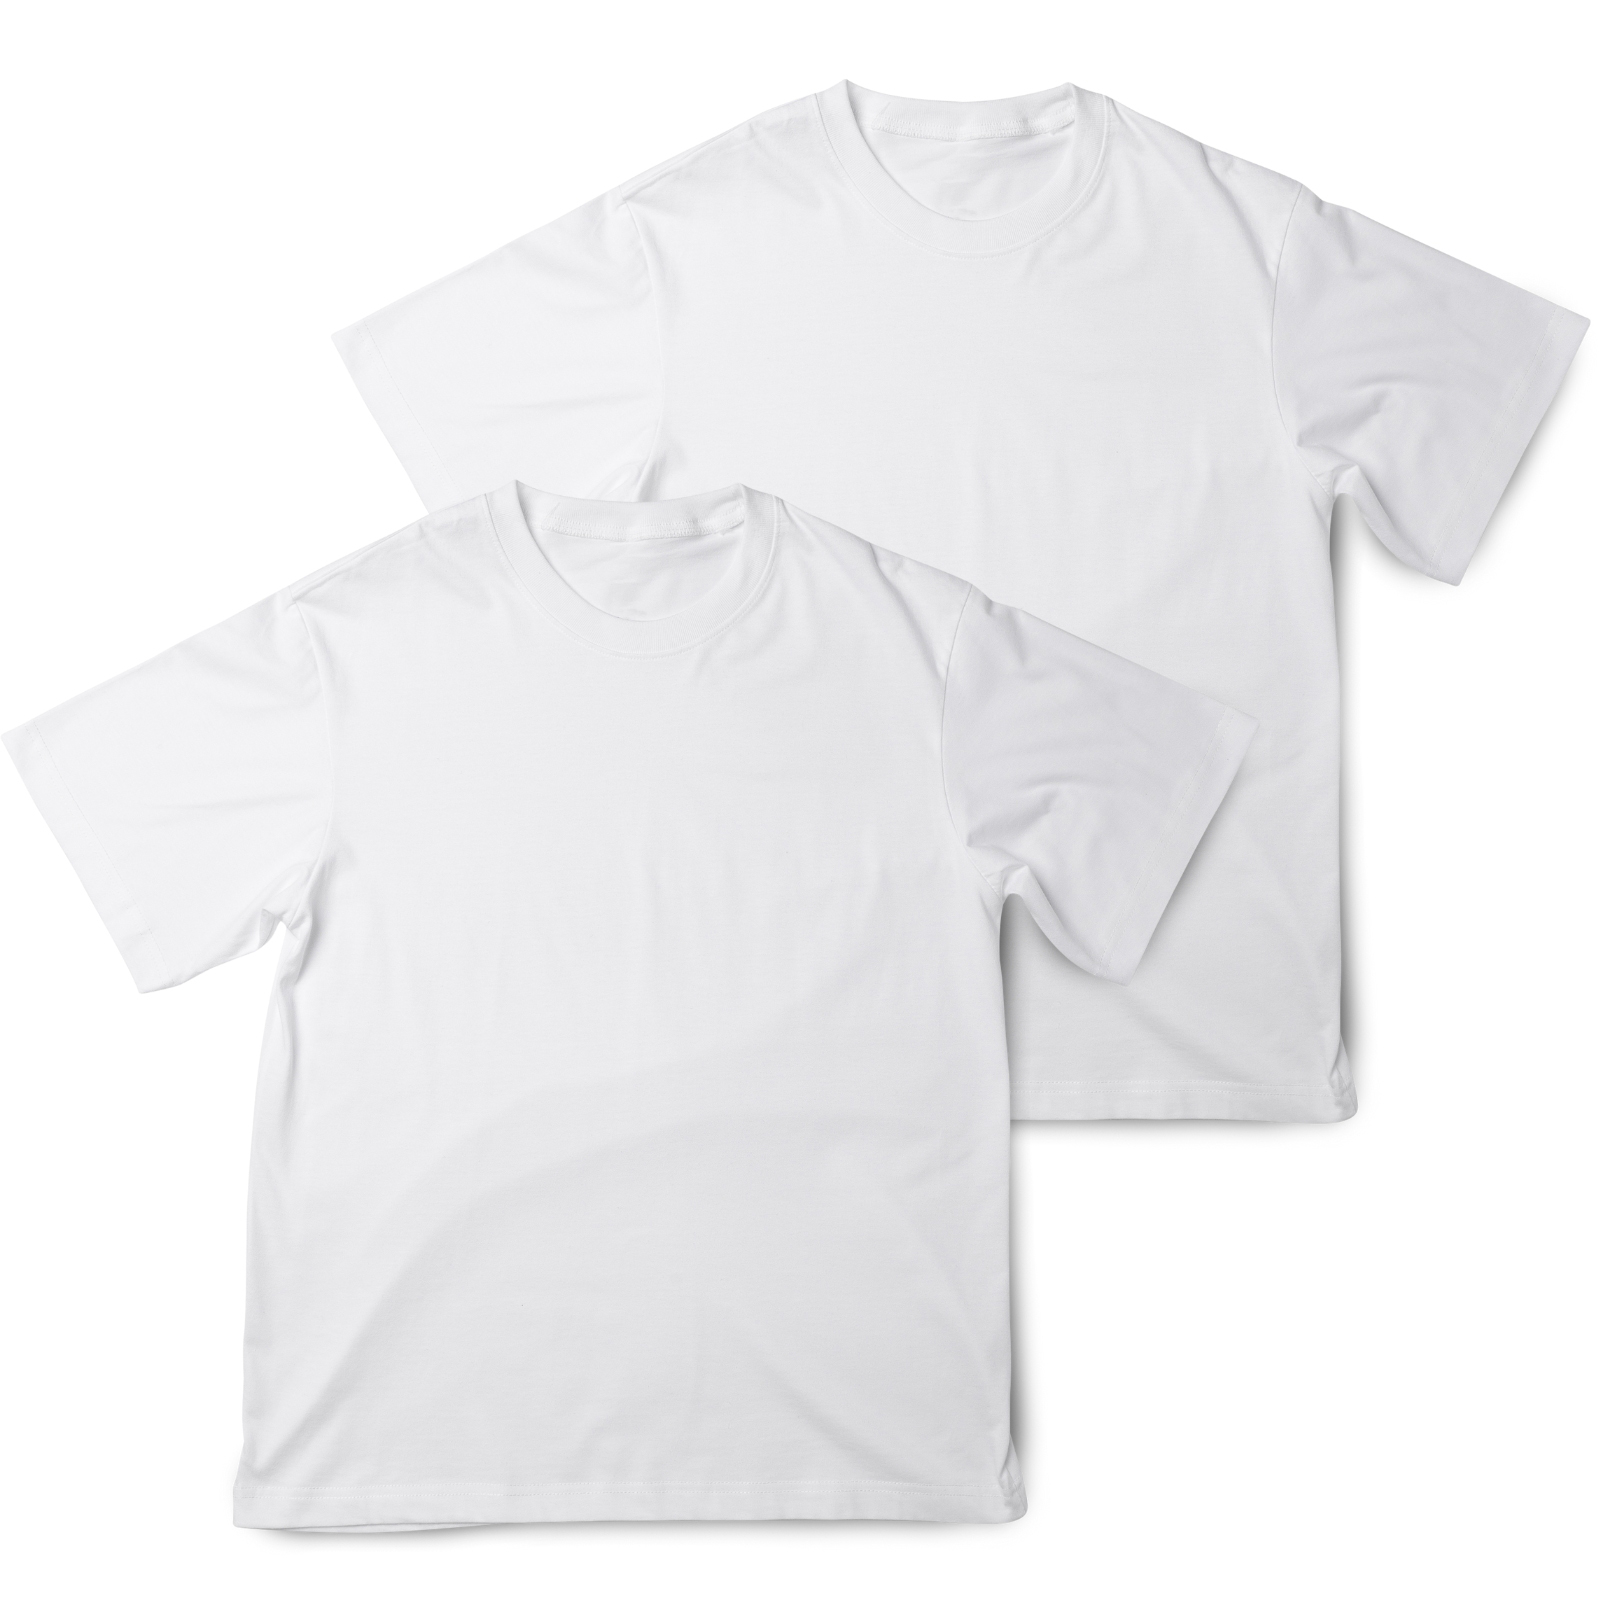 Tシャツ メンズ 半袖 無地 白 日本製 2枚セット 超厚手 8.8オンス 透けない 透け防止 綿1...